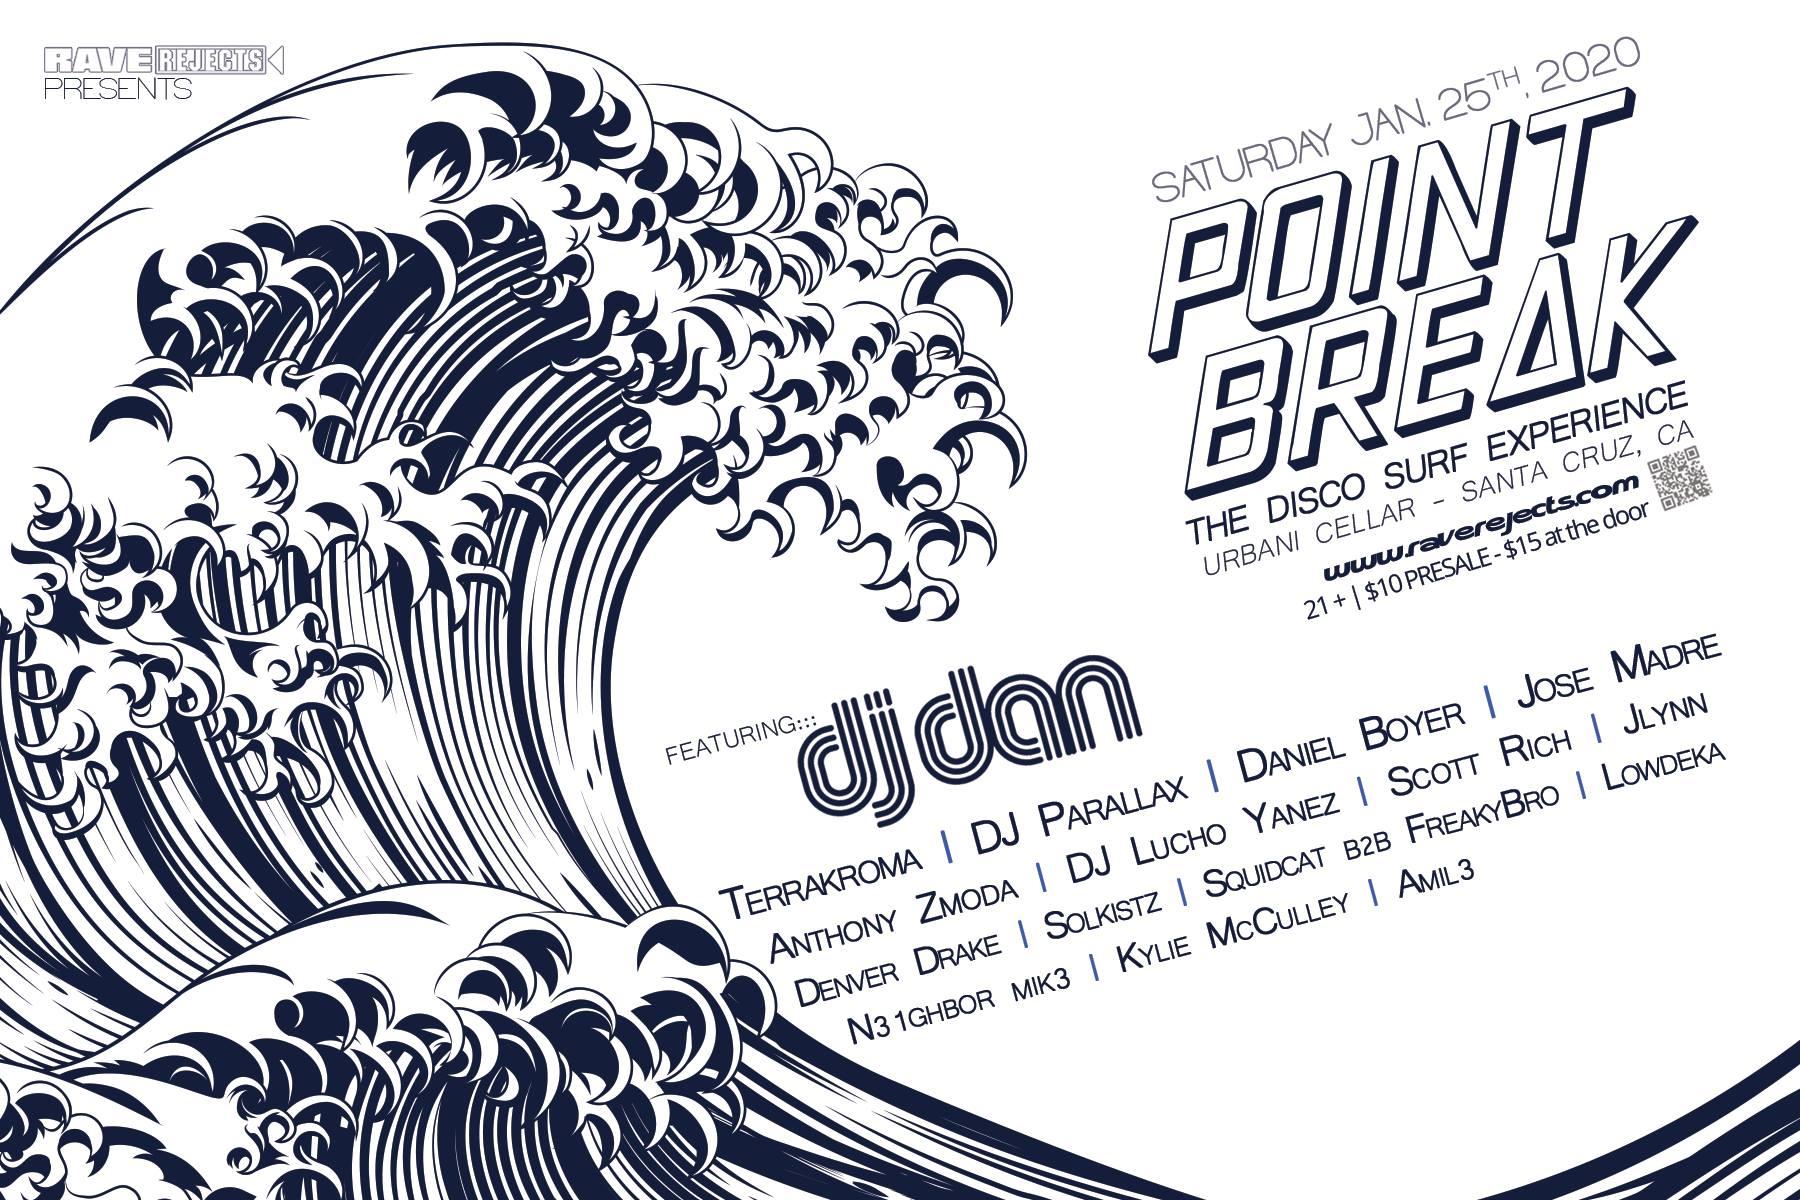 POINT BREAK featuring DJ Dan! A Disco Surf Theme!